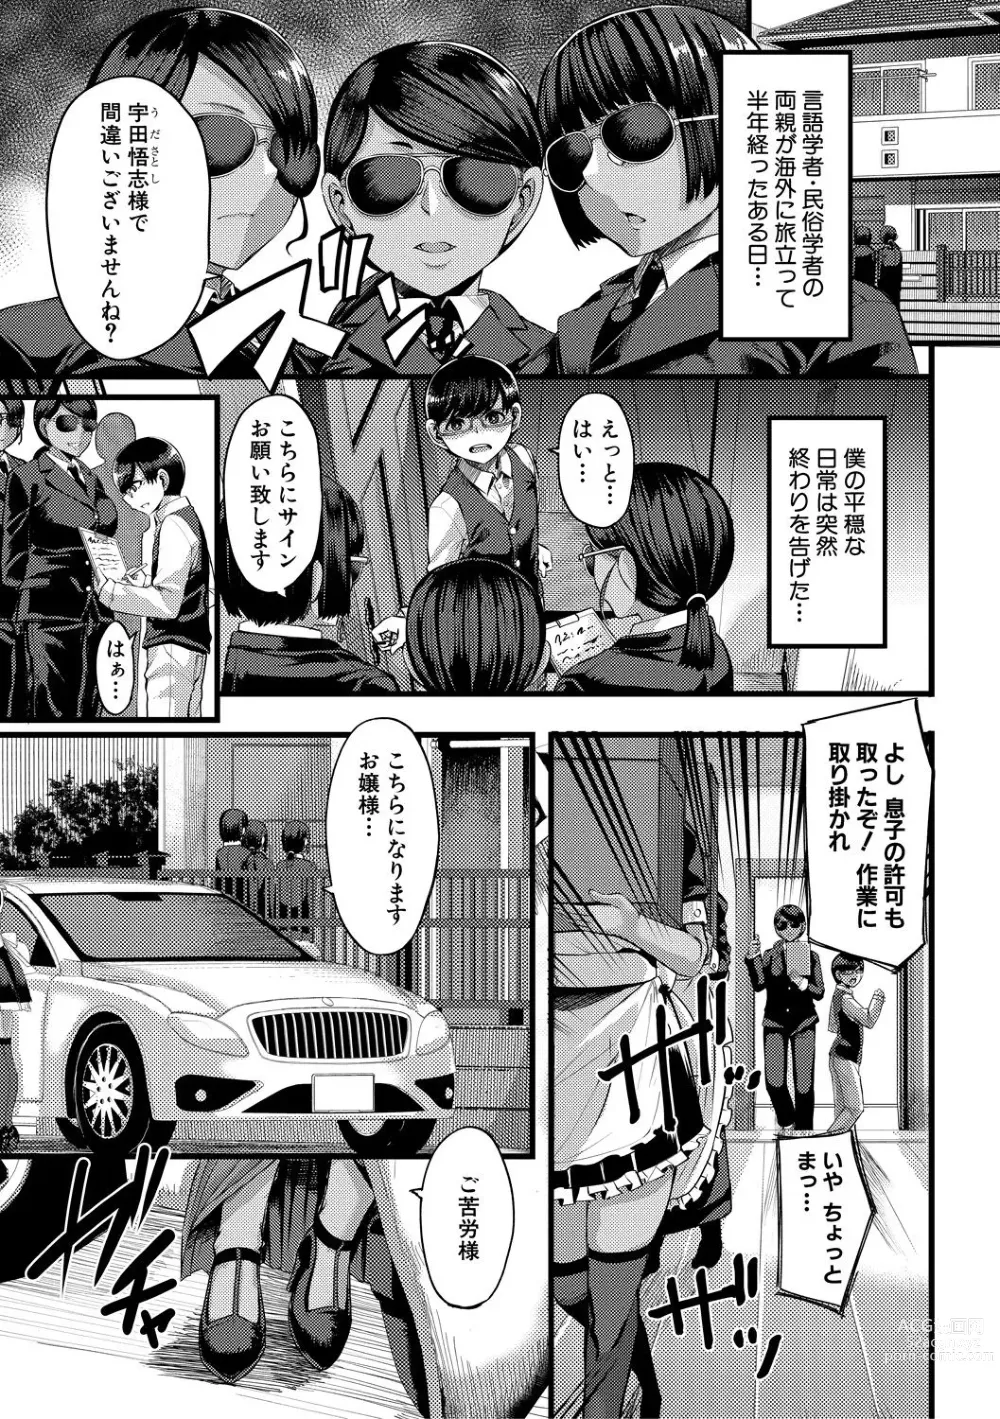 Page 3 of manga Kasshoku Hime to Himitsu no Keiyaku